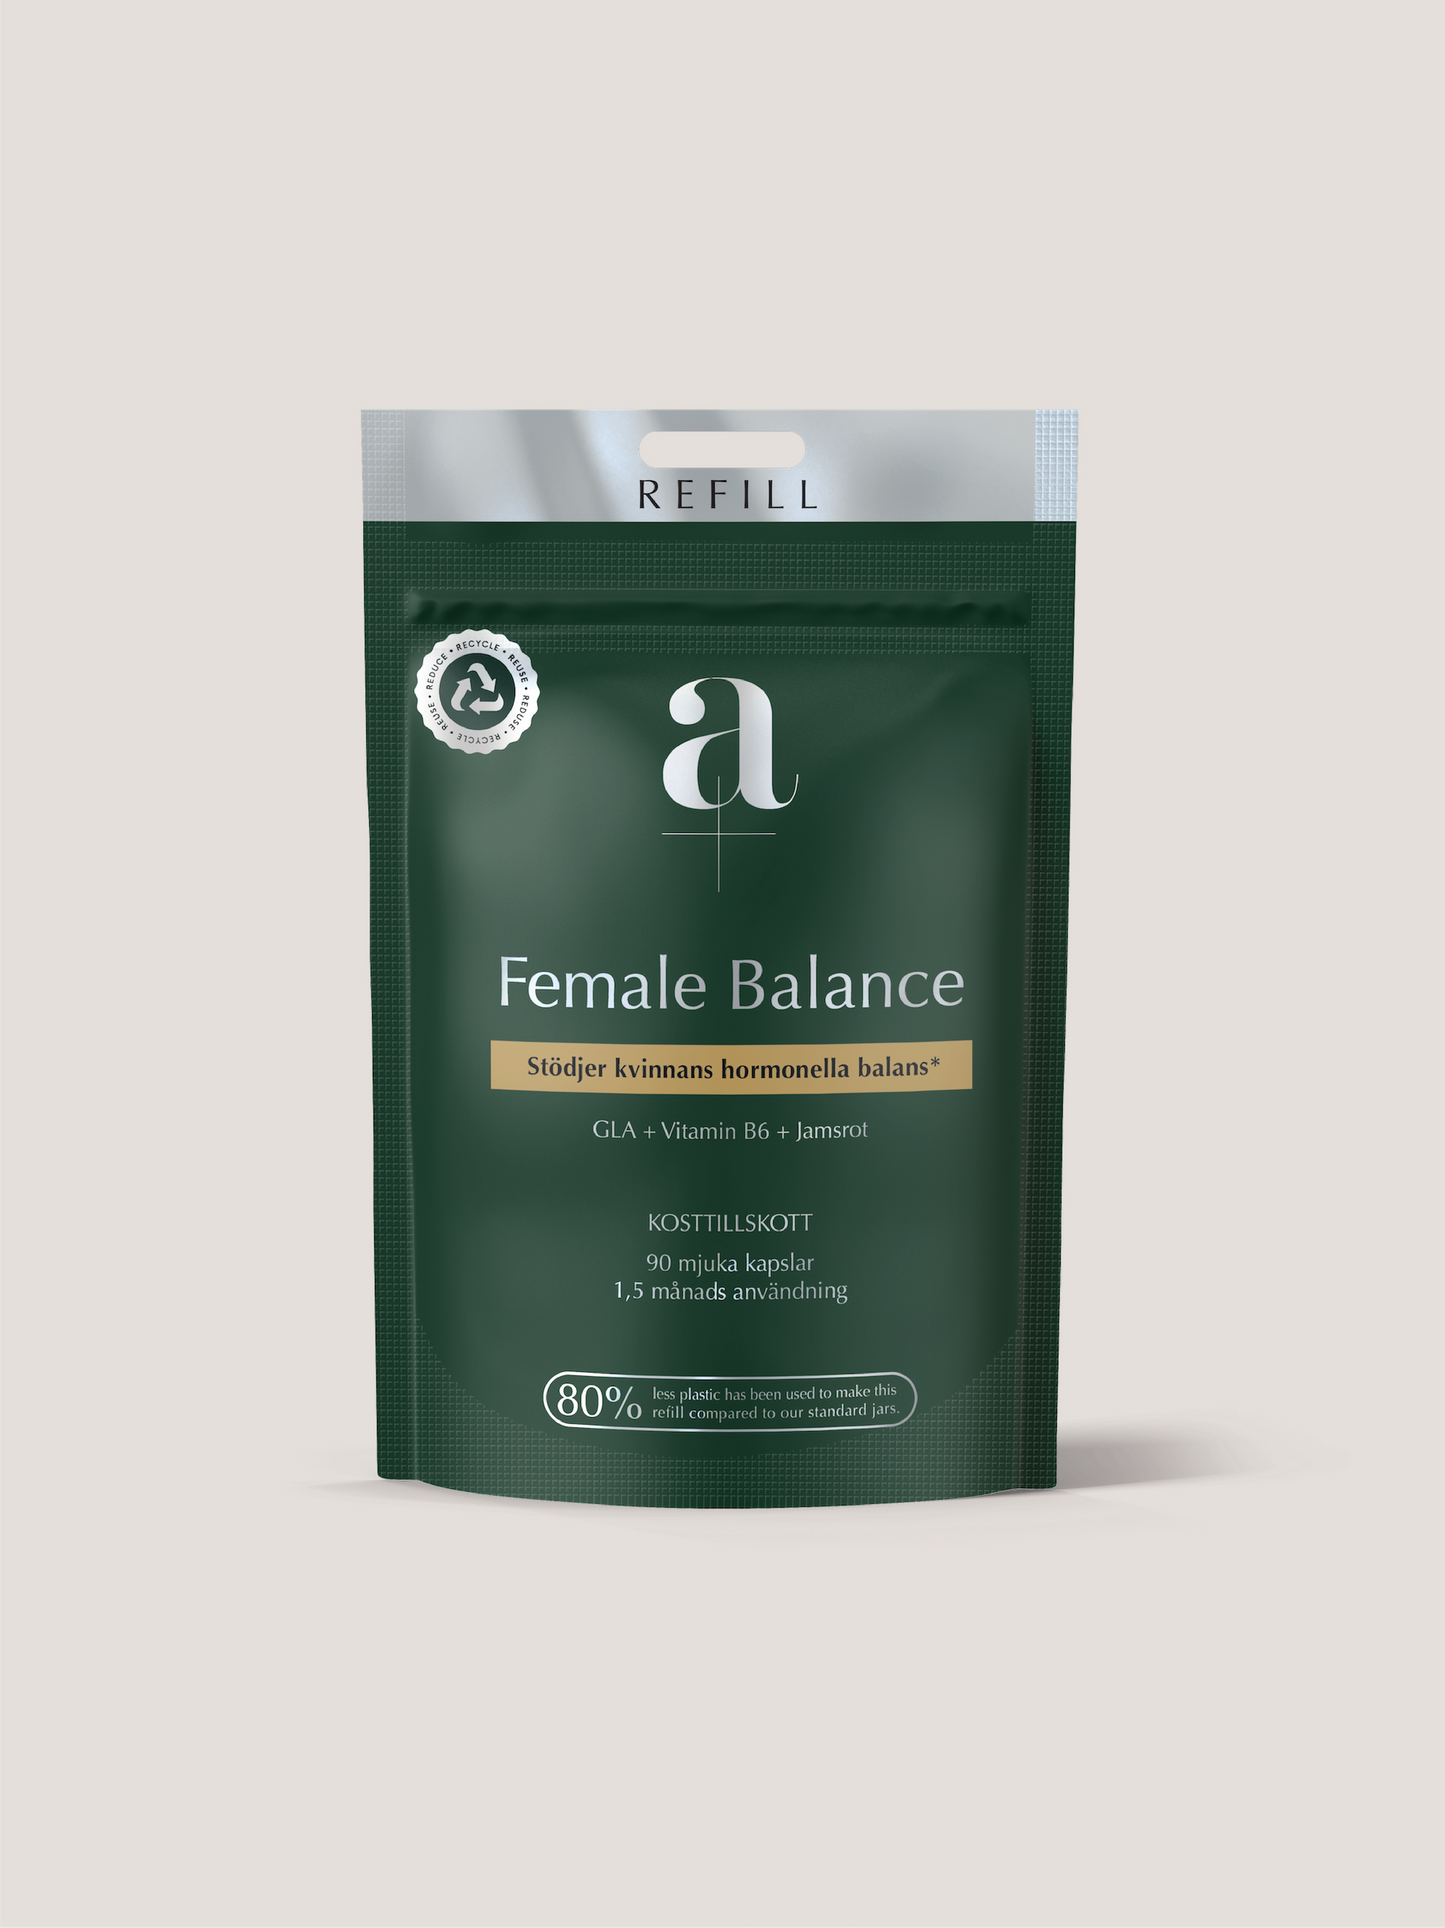 A+ Female Balance Refill